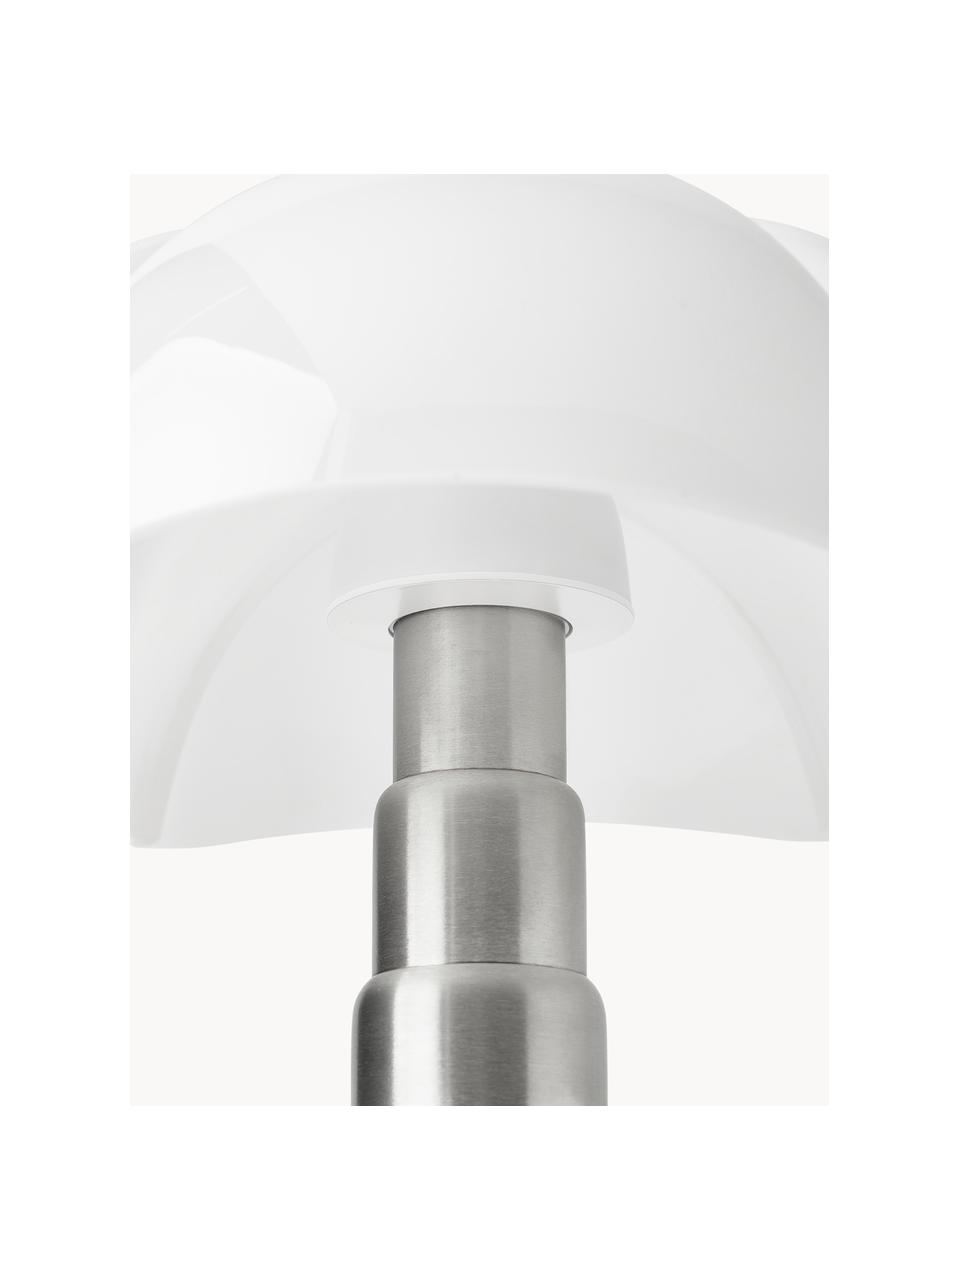 Große dimmbare LED-Tischlampe Pipistrello, höhenverstellbar, Dunkelbraun, matt, Ø 40 x H  50 - 62 cm